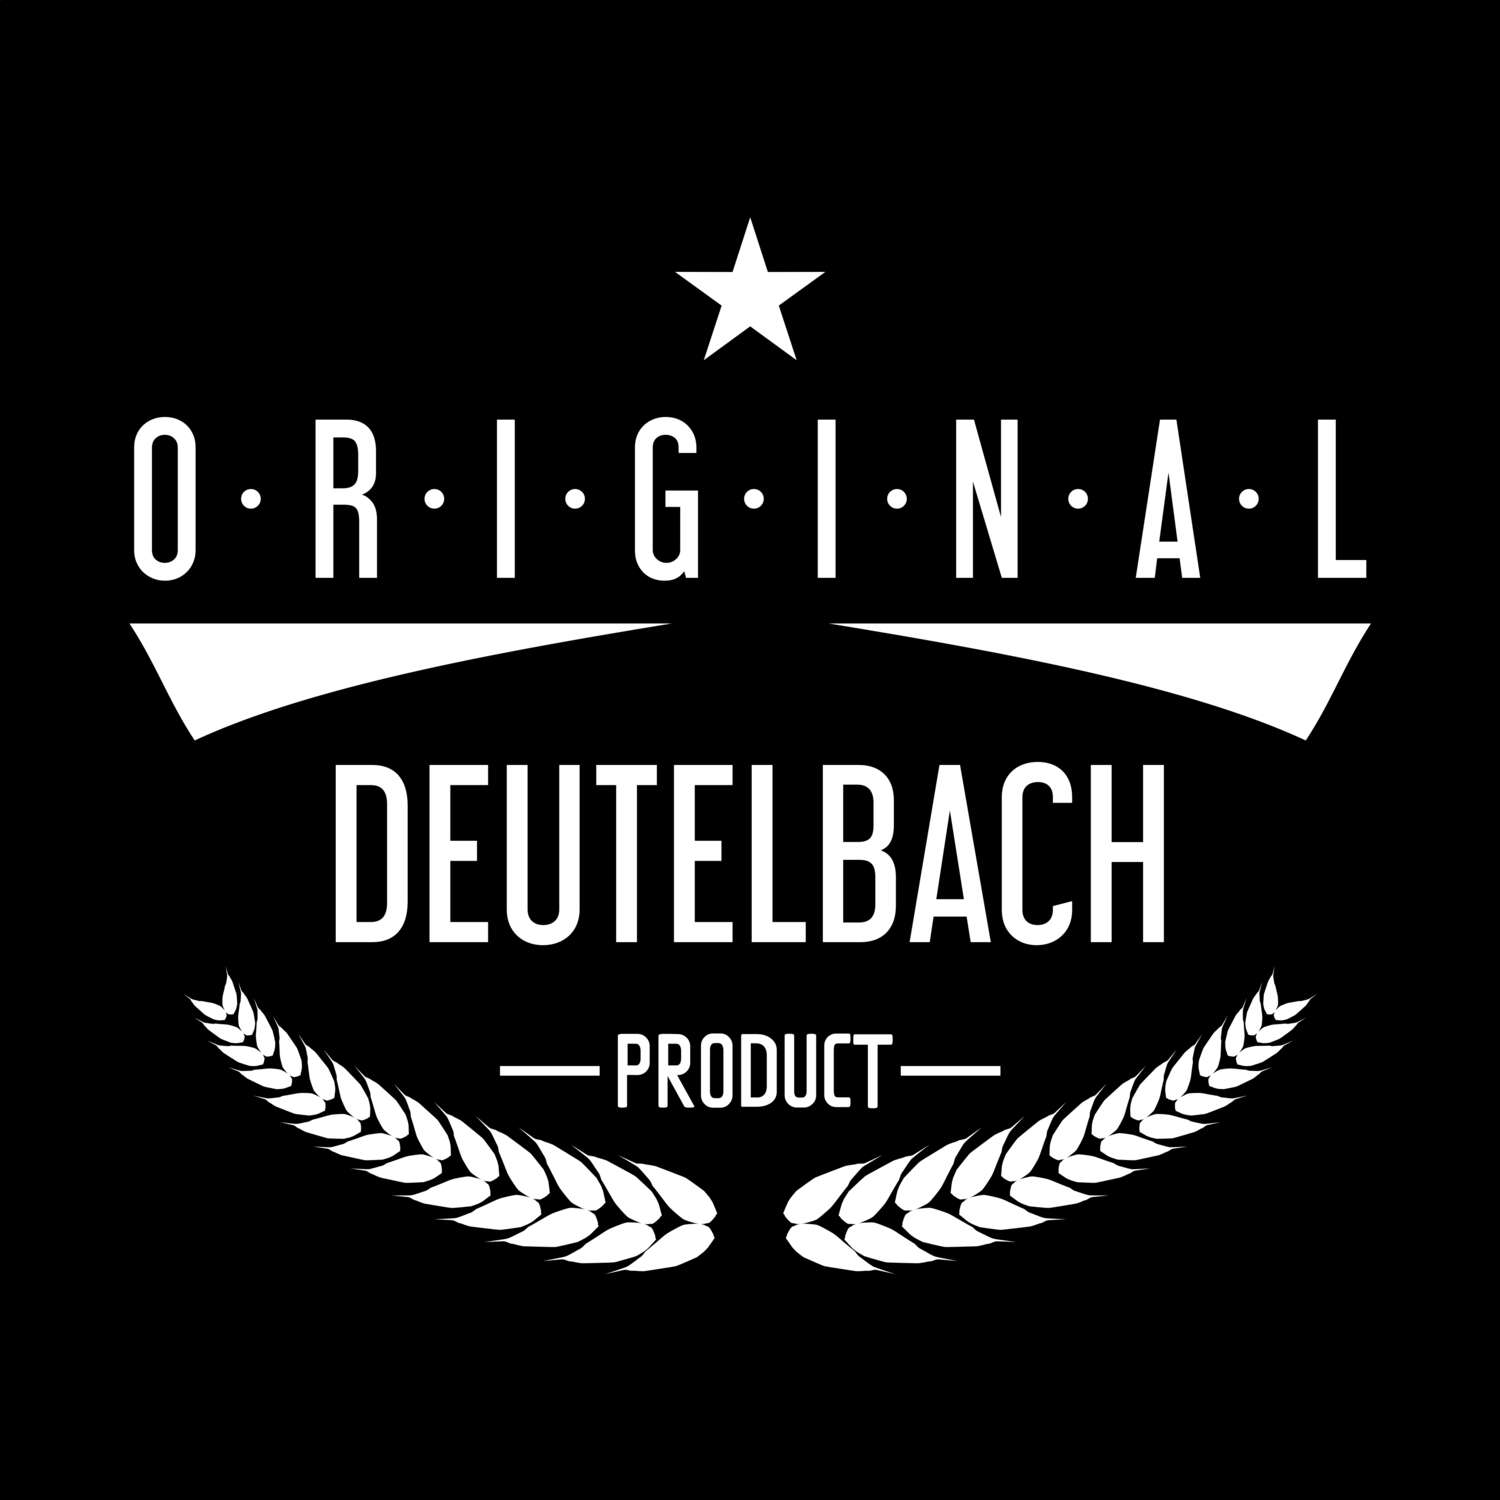 Deutelbach T-Shirt »Original Product«